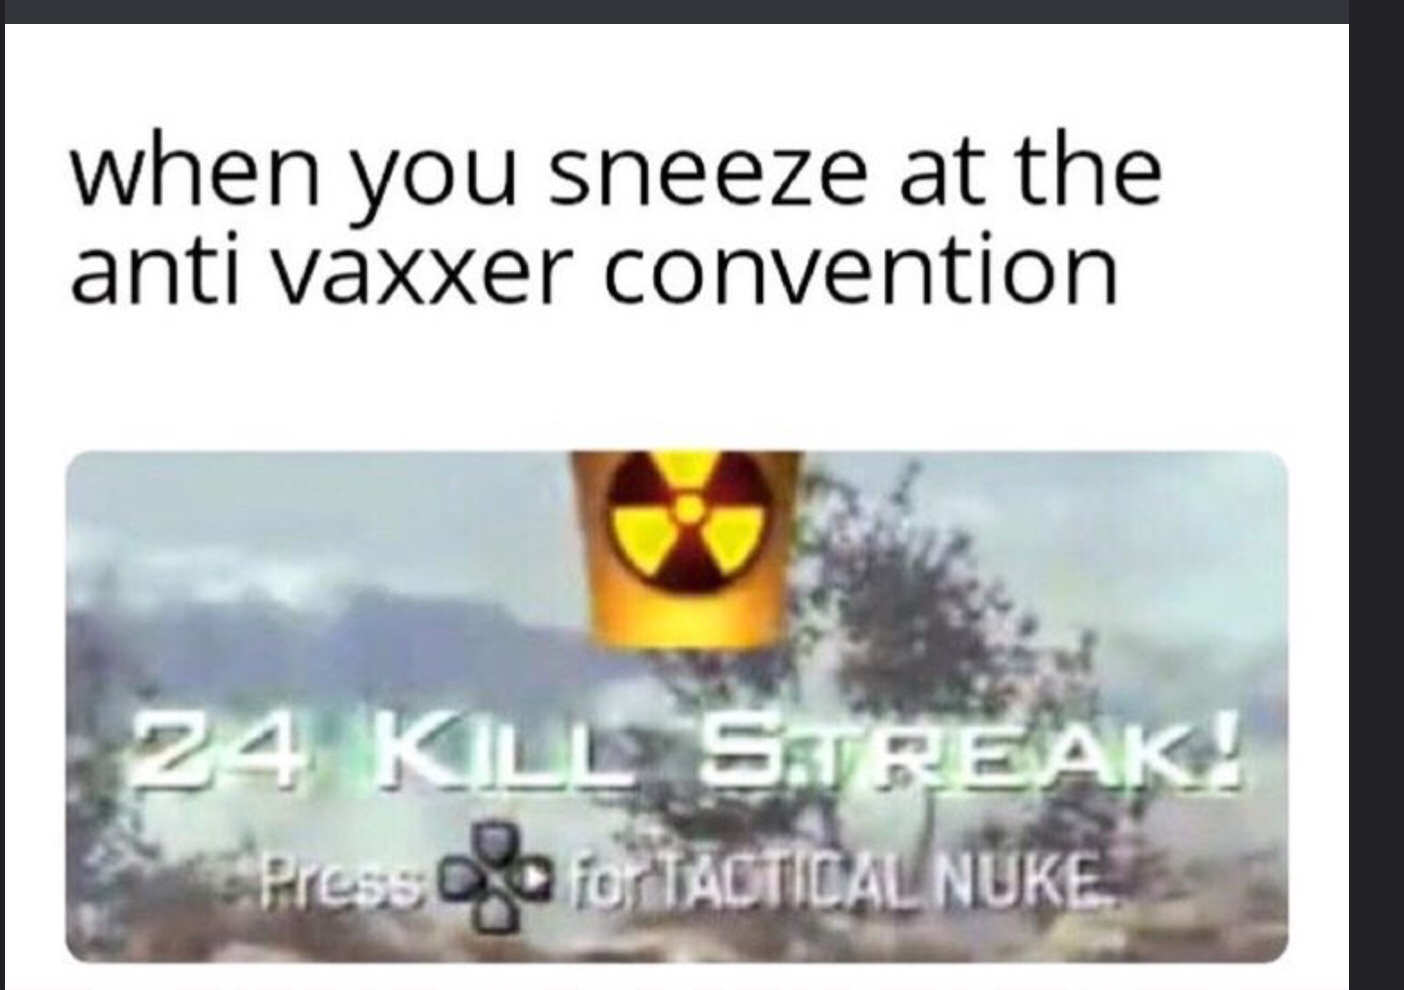 tactical nuke emblem - when you sneeze at the anti vaxxer convention 24 Kill Streak! Tactical Nuke